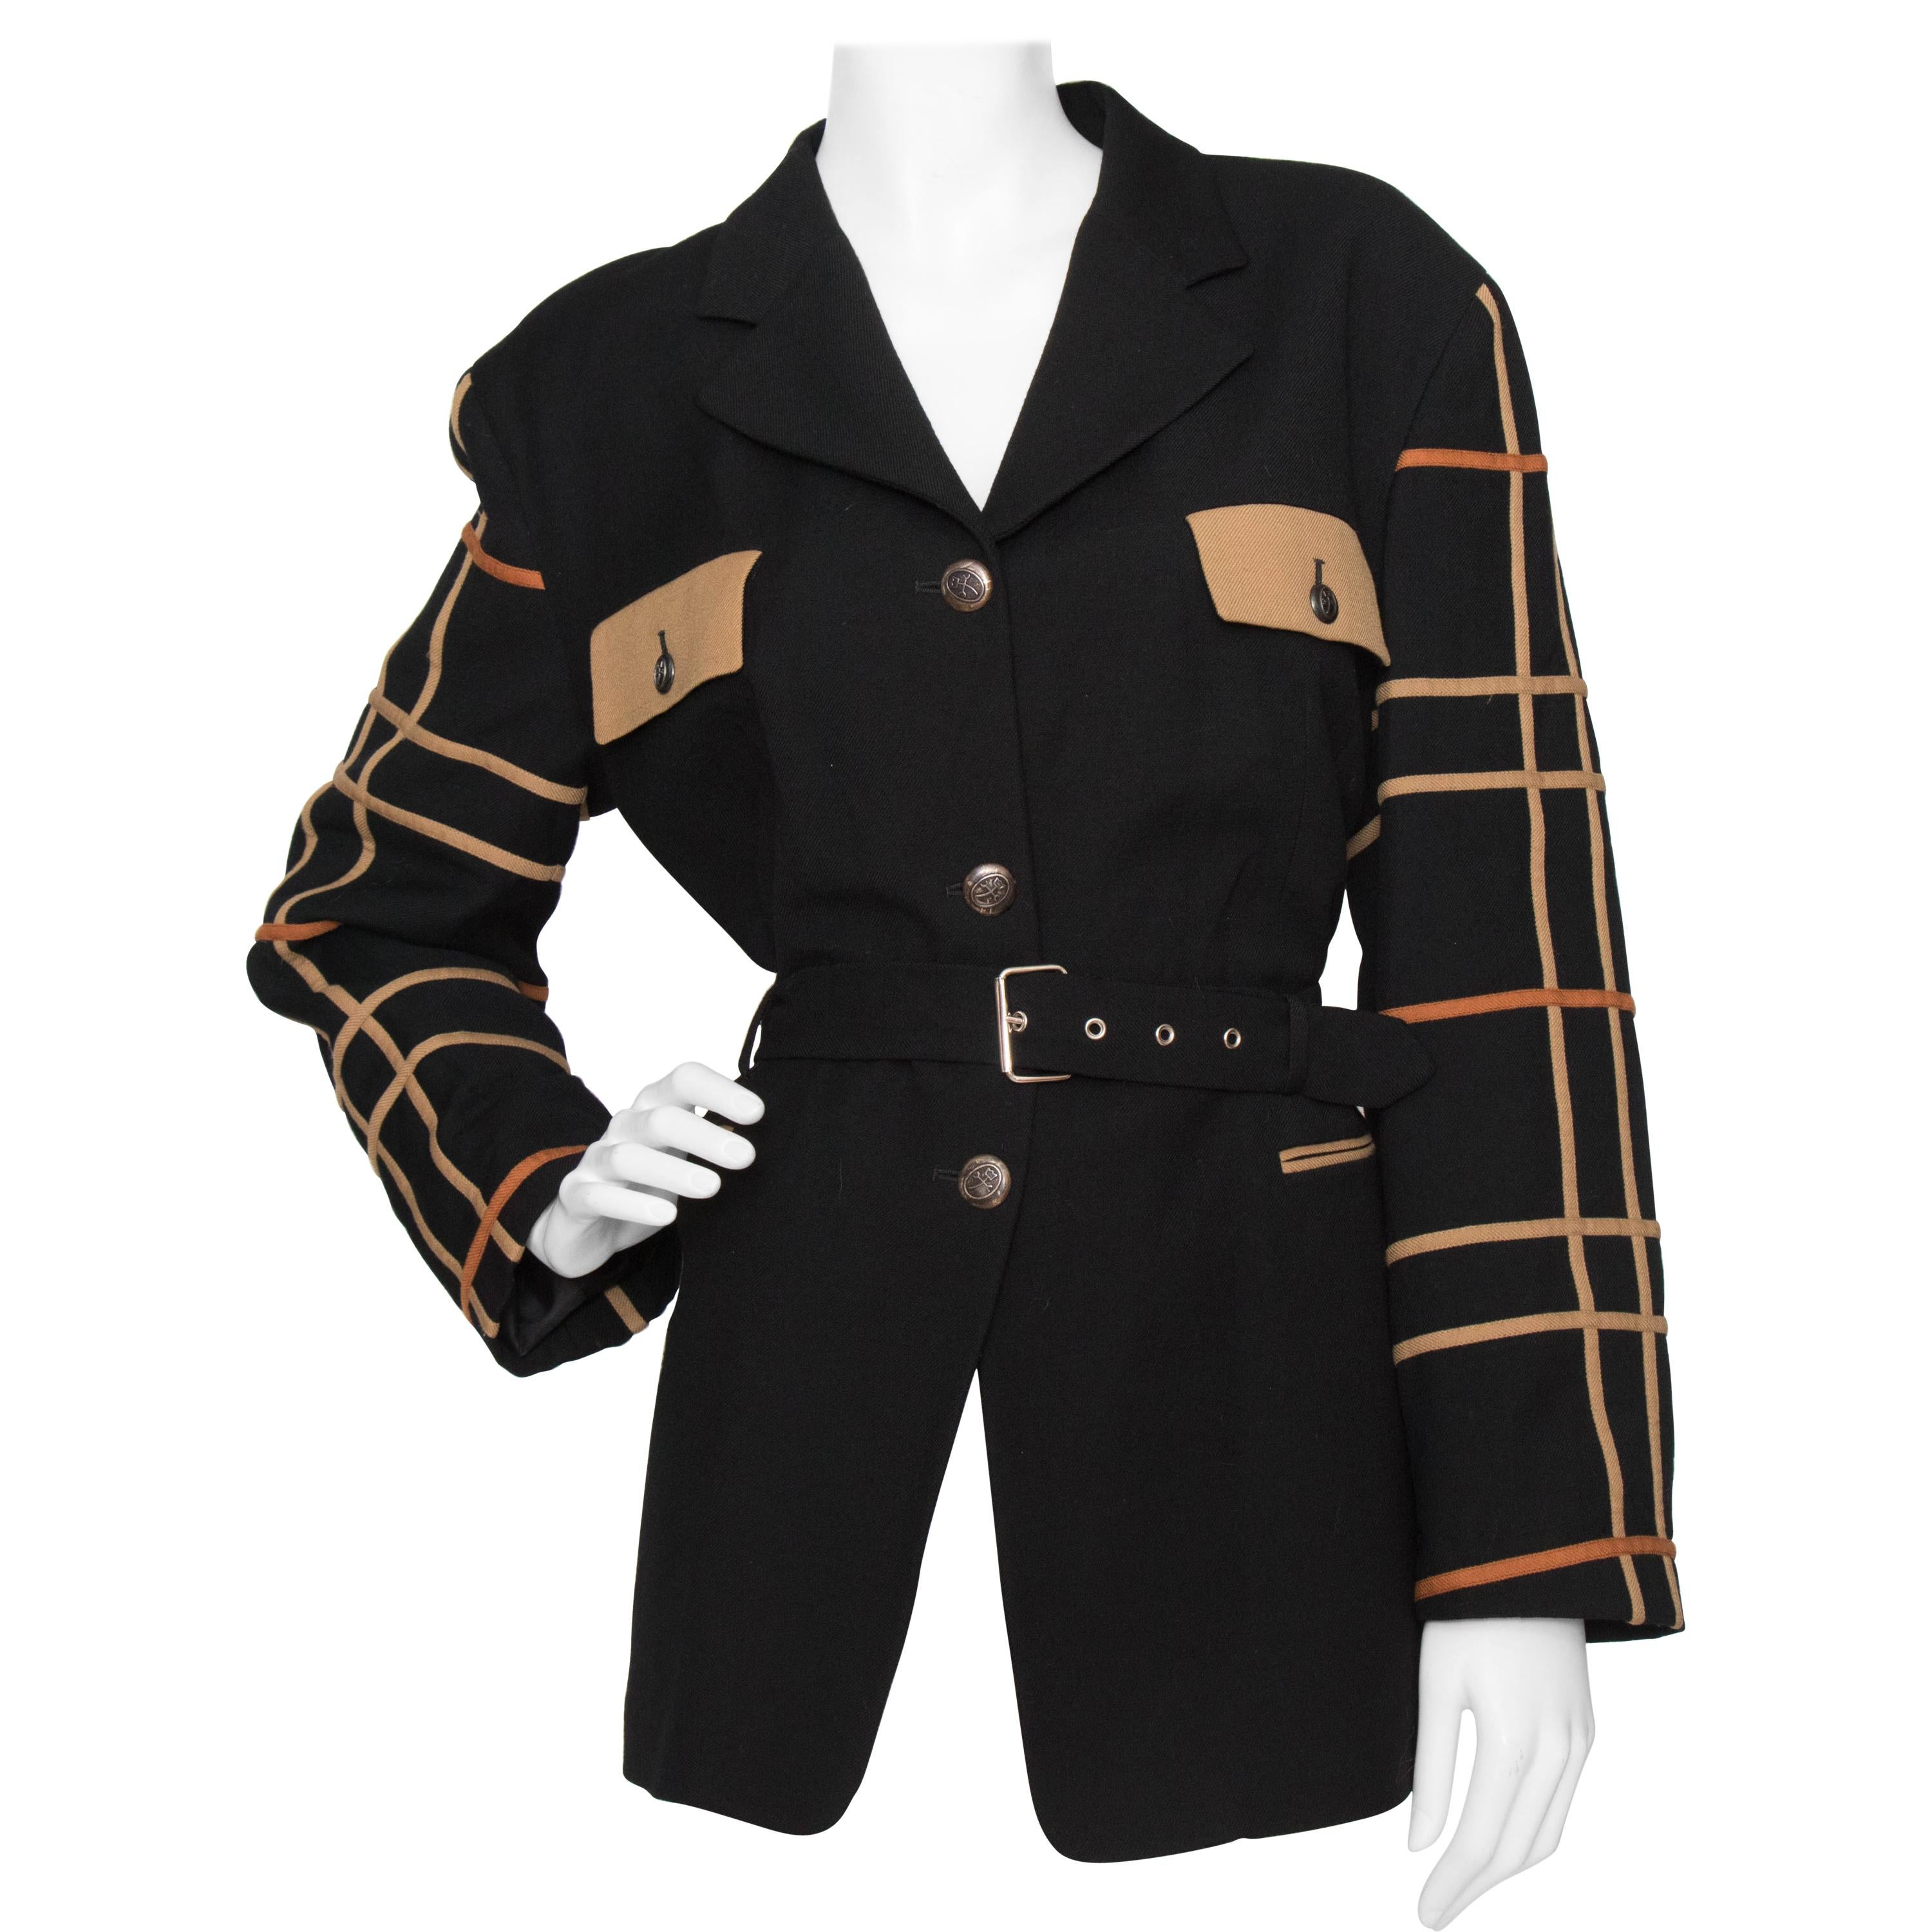 A 1980s Vintage Jean-Charles de Castelbajac Black Wool Jacket